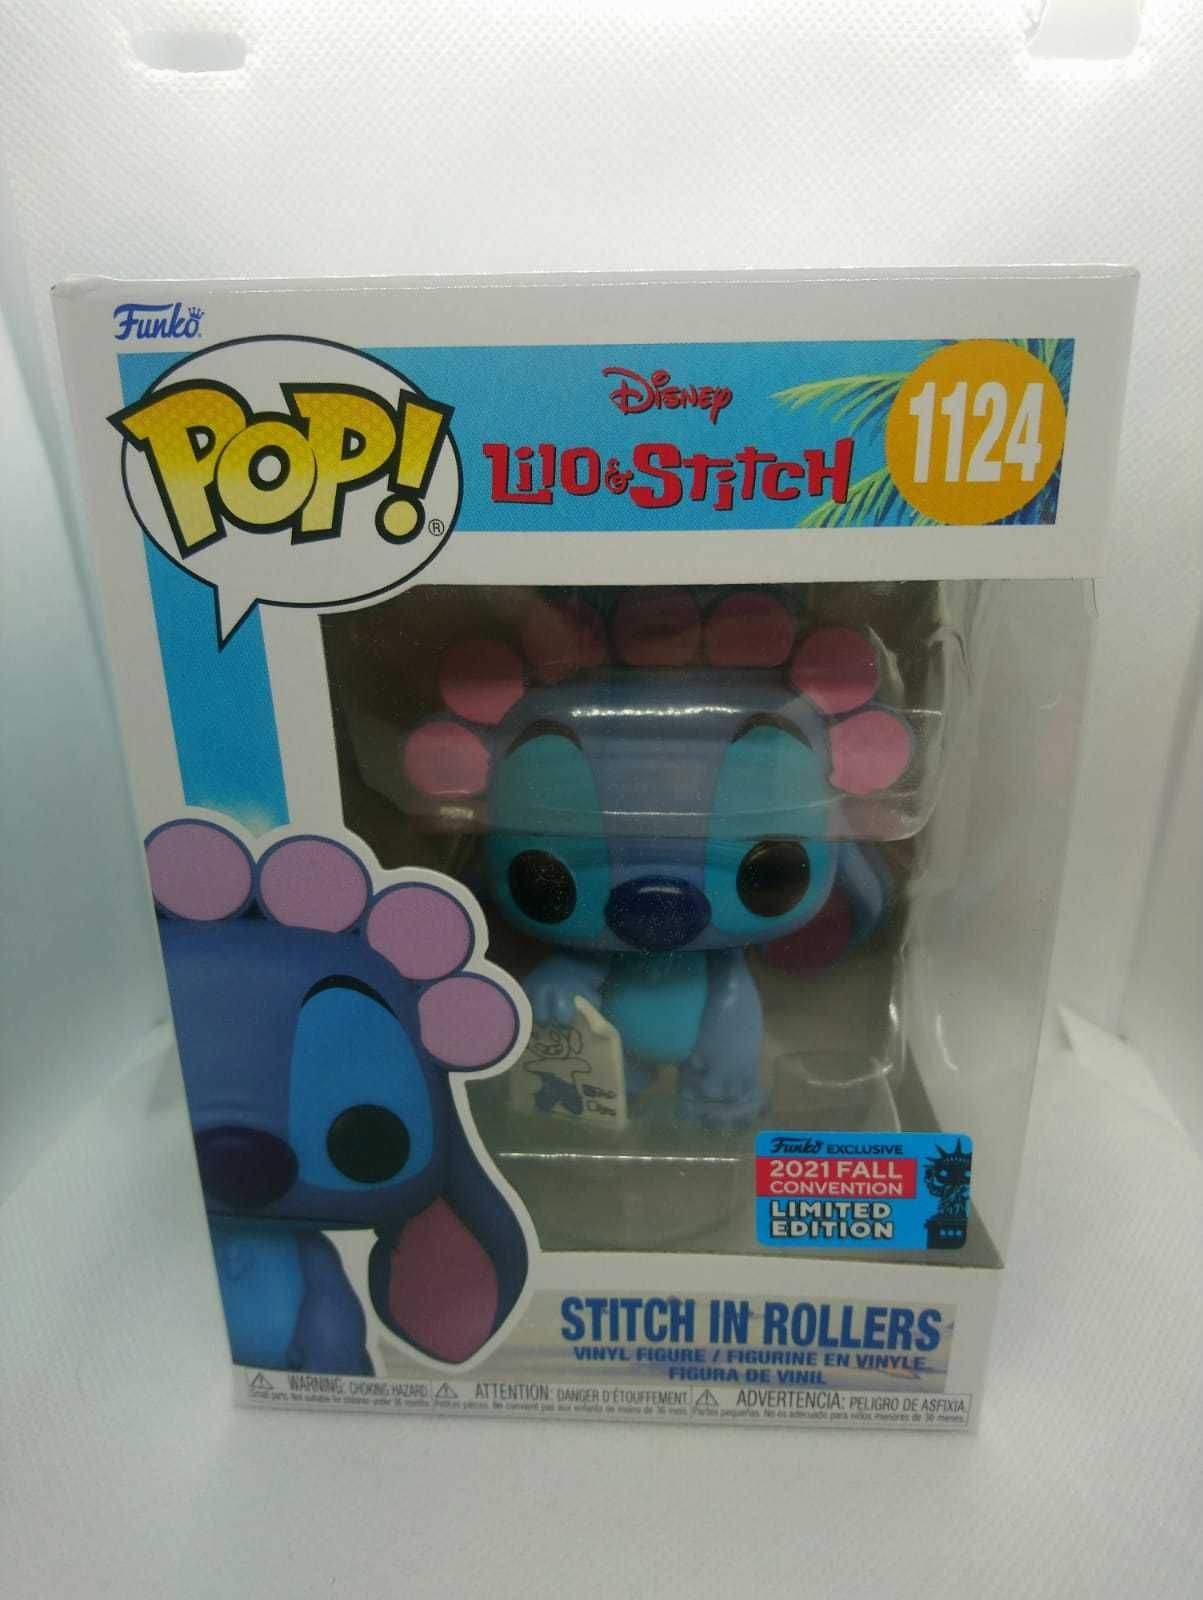 Funko Pop Disney Lilo & Stitch in Rollers 1124